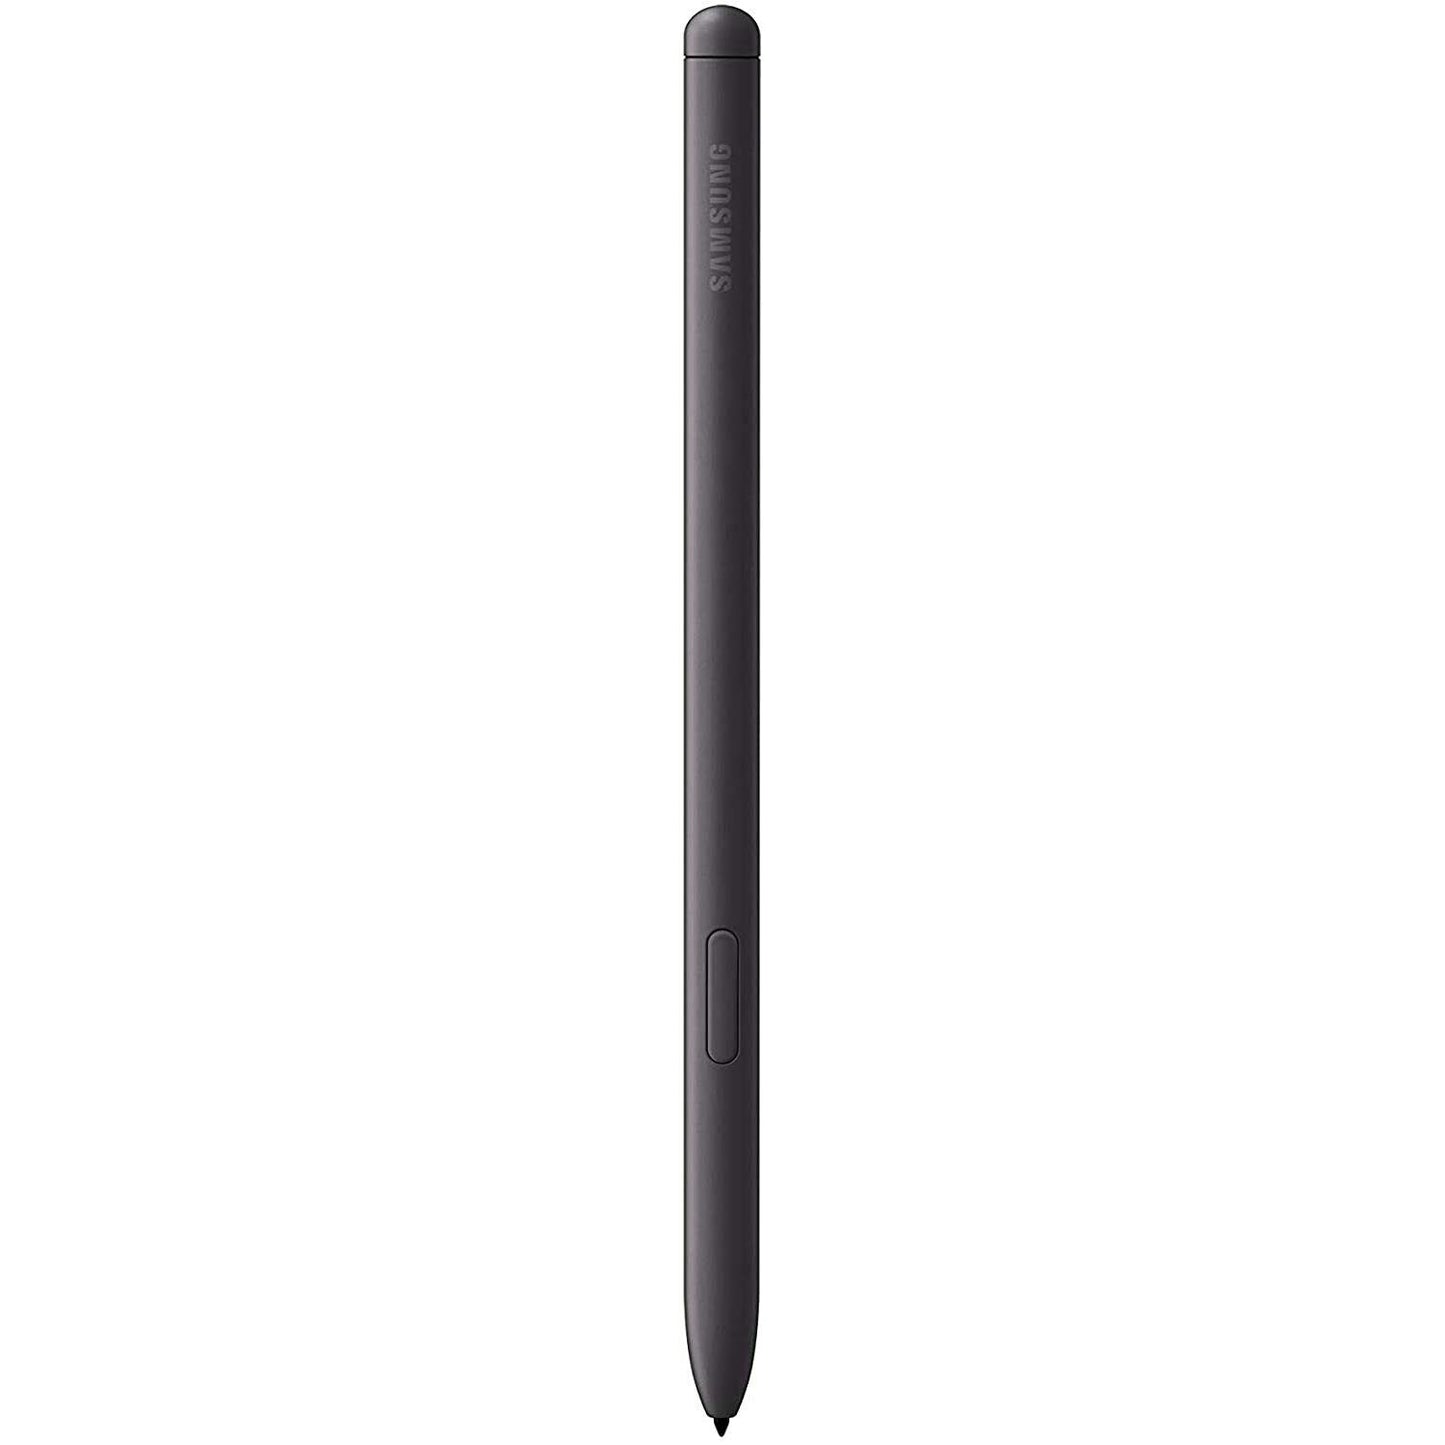 Samsung Galaxy Tab S6 Lite 10.4" 64GB Wi-Fi Tablet Gray (SM-P613) 2022 Model